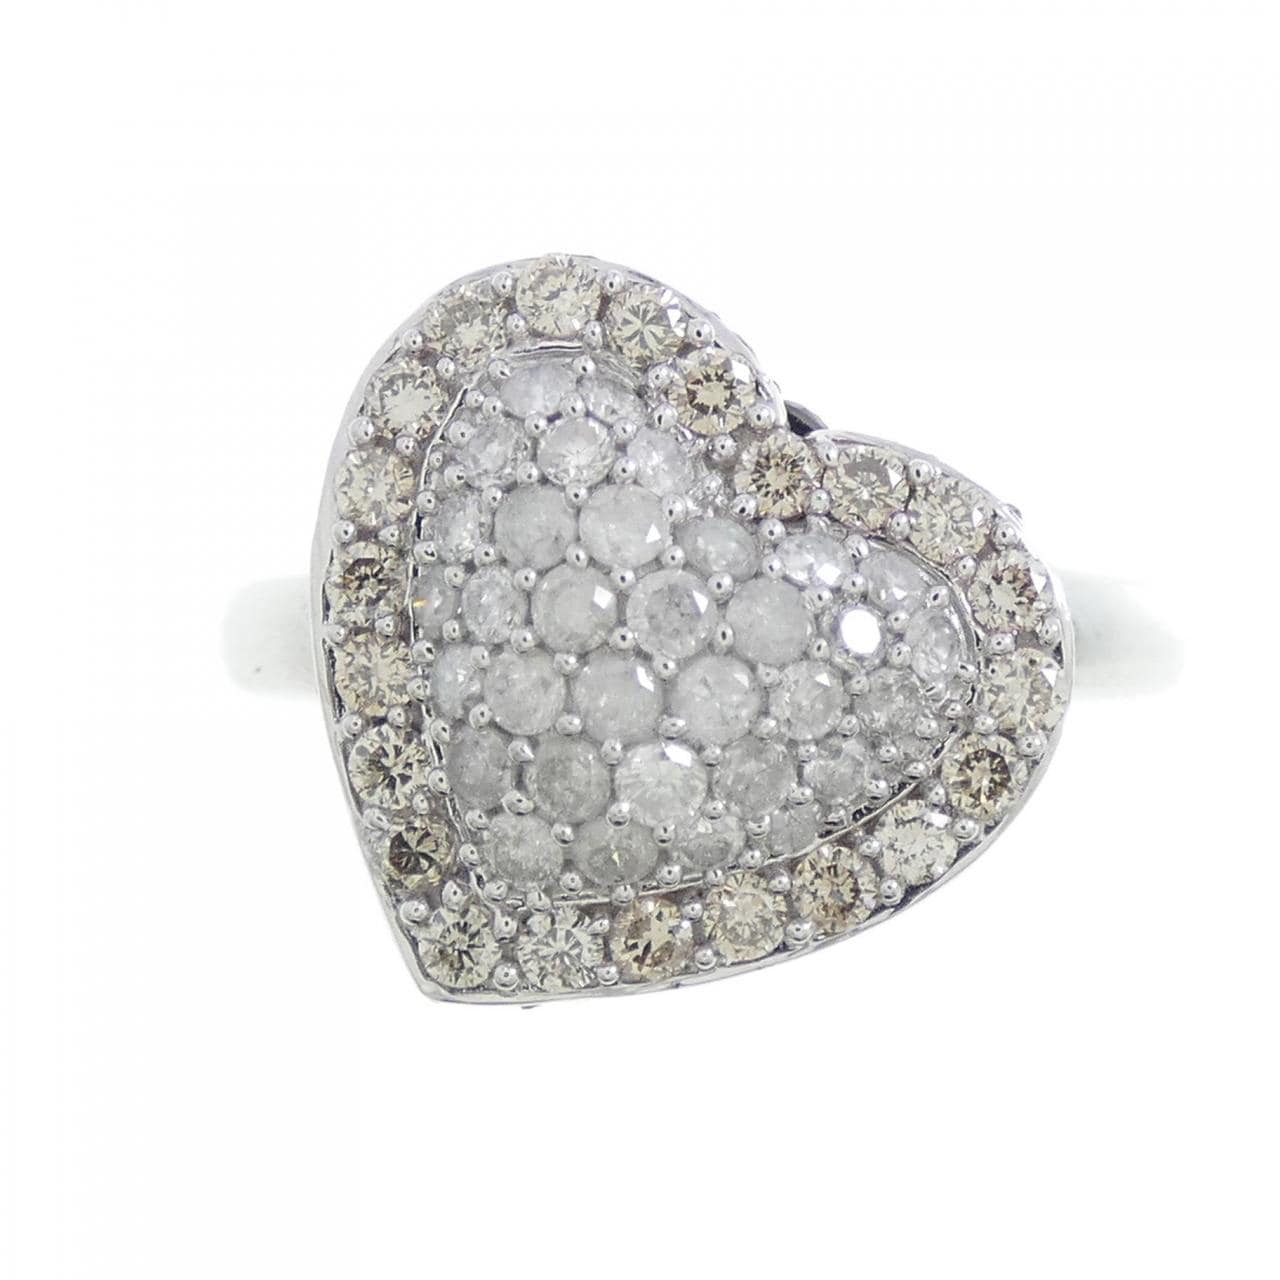 K18WG/K18BG Pave Heart Diamond Ring 0.92CT